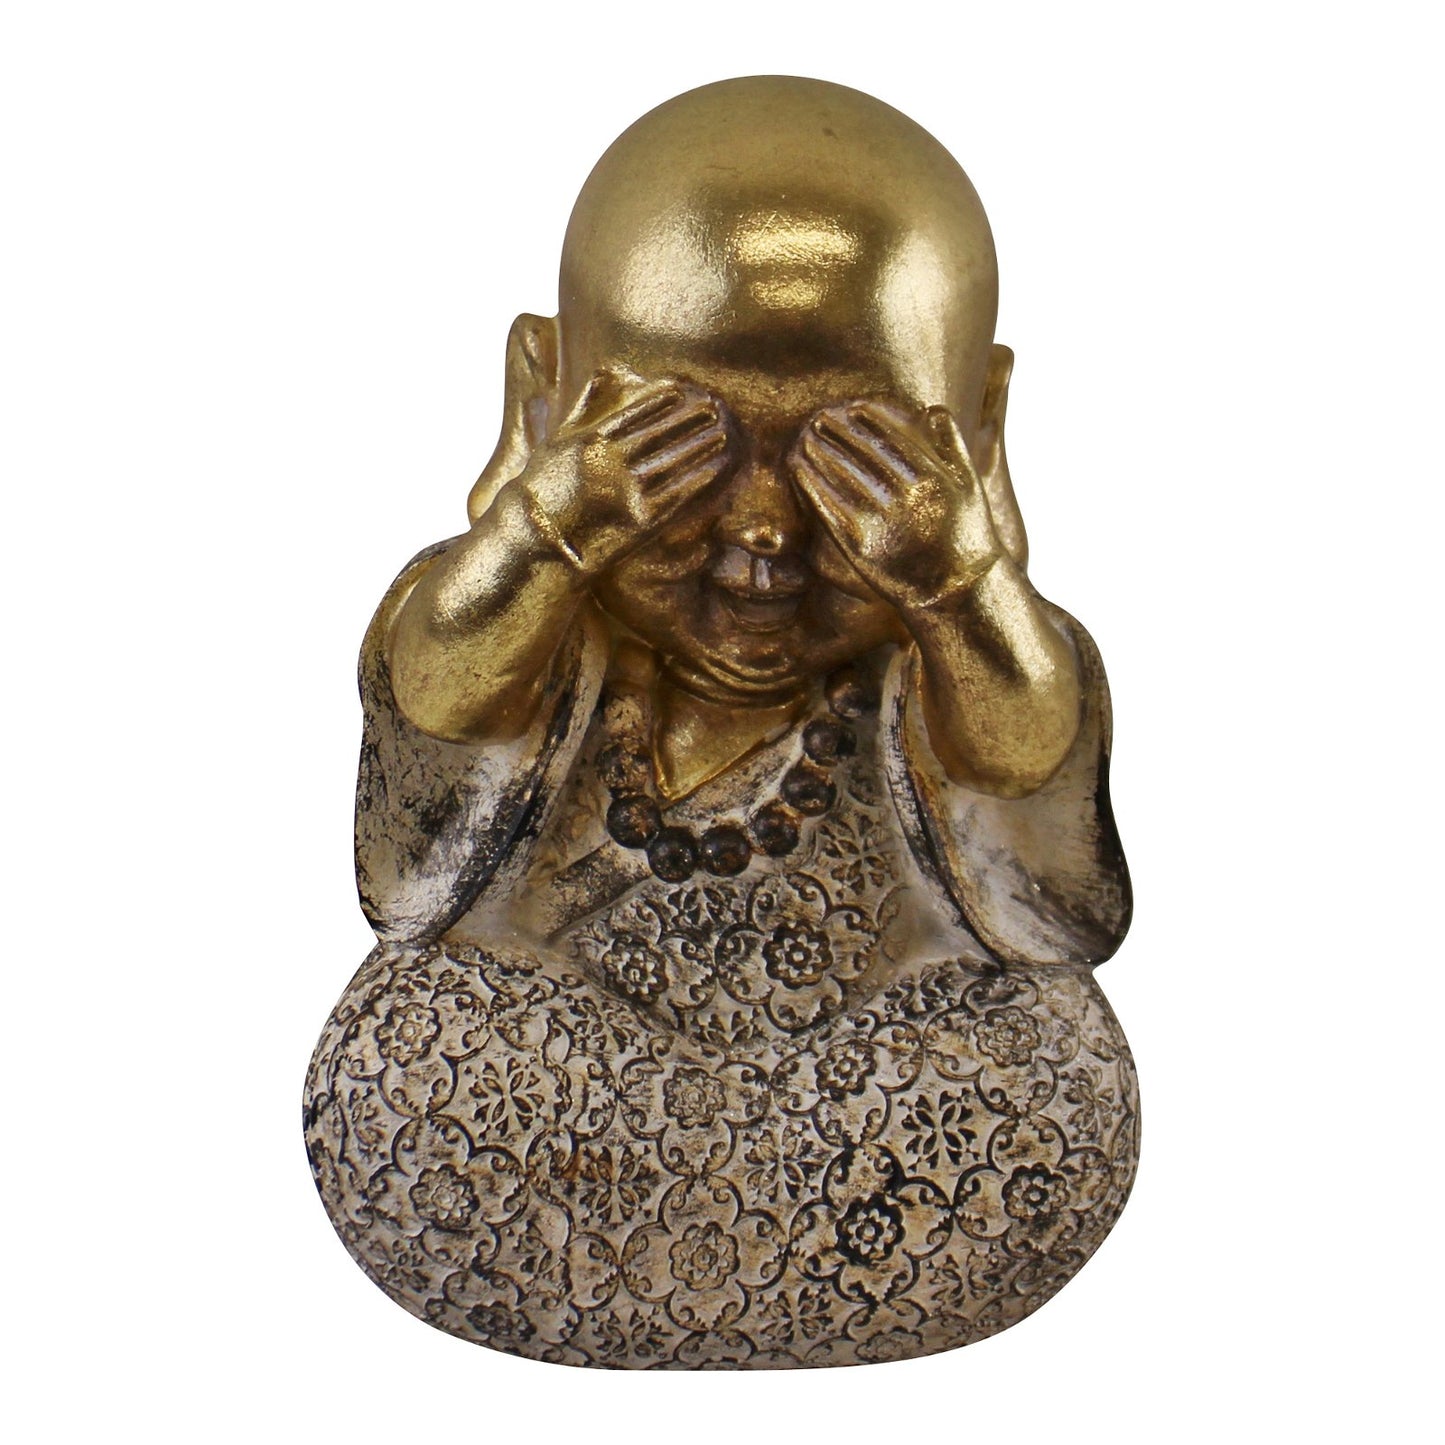 Set of 3 Gold Buddha Ornaments, See No Evil, Hear No Evil, Speak No Evil